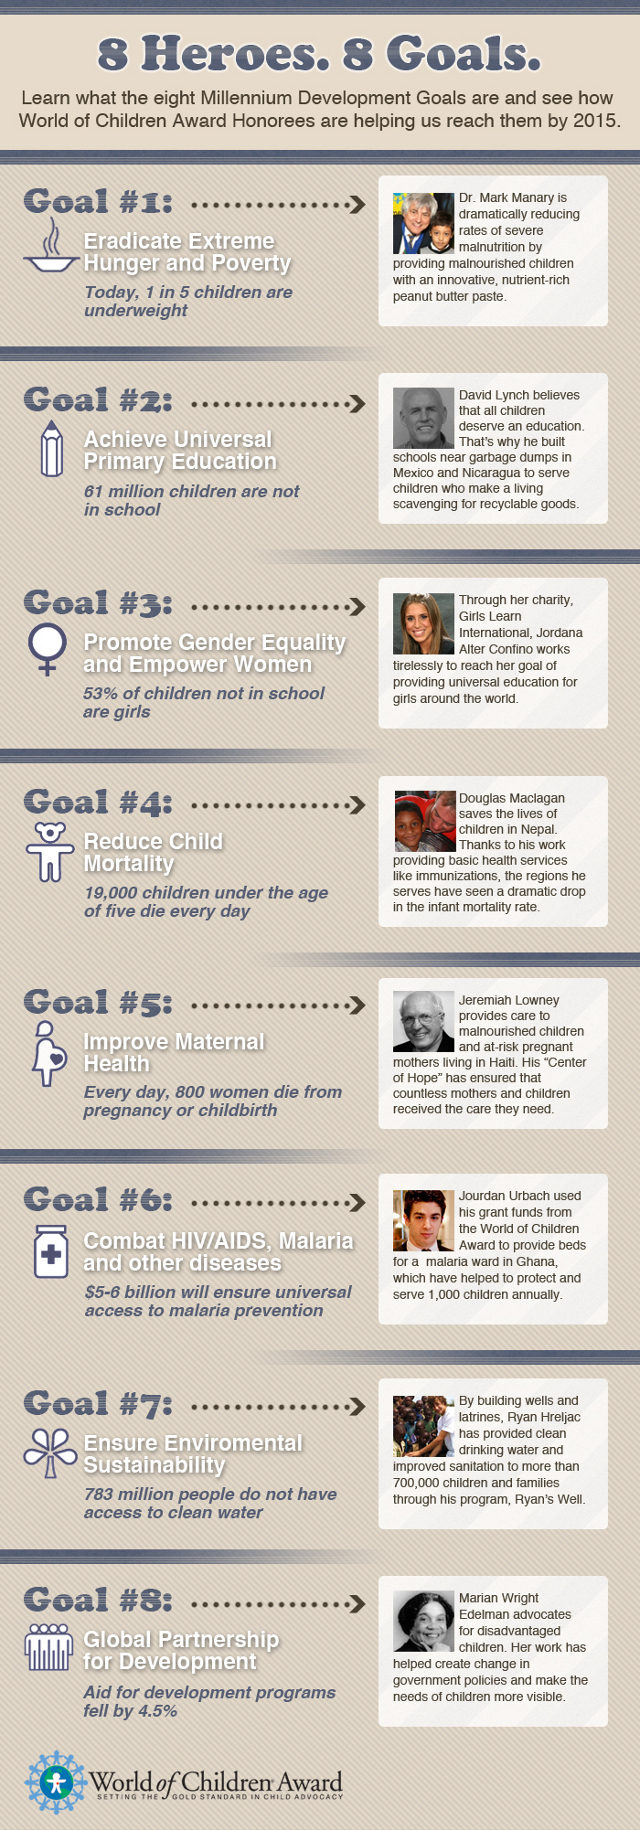 Millennium Development Goals infographic